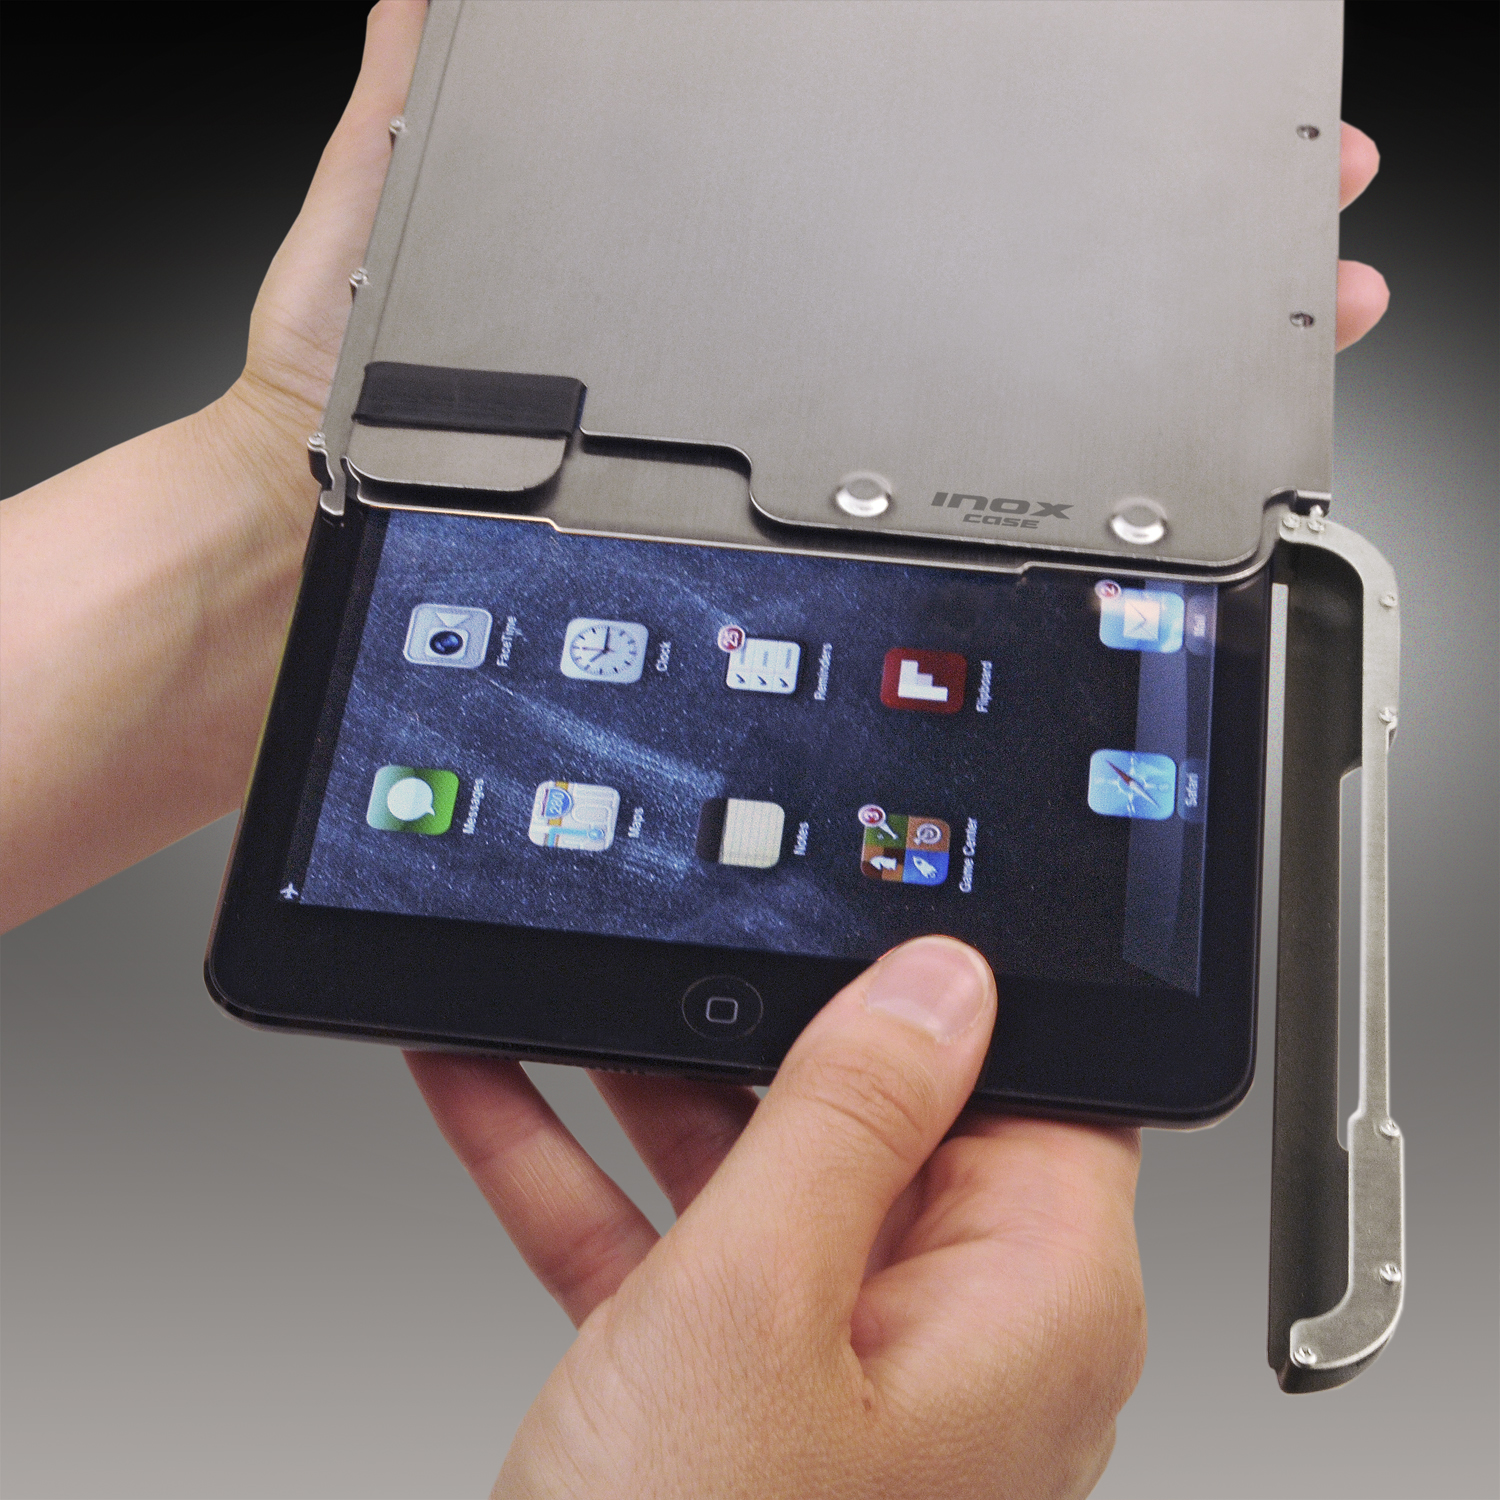 Inserting the iPad mini into the iNoxCase IMINIS